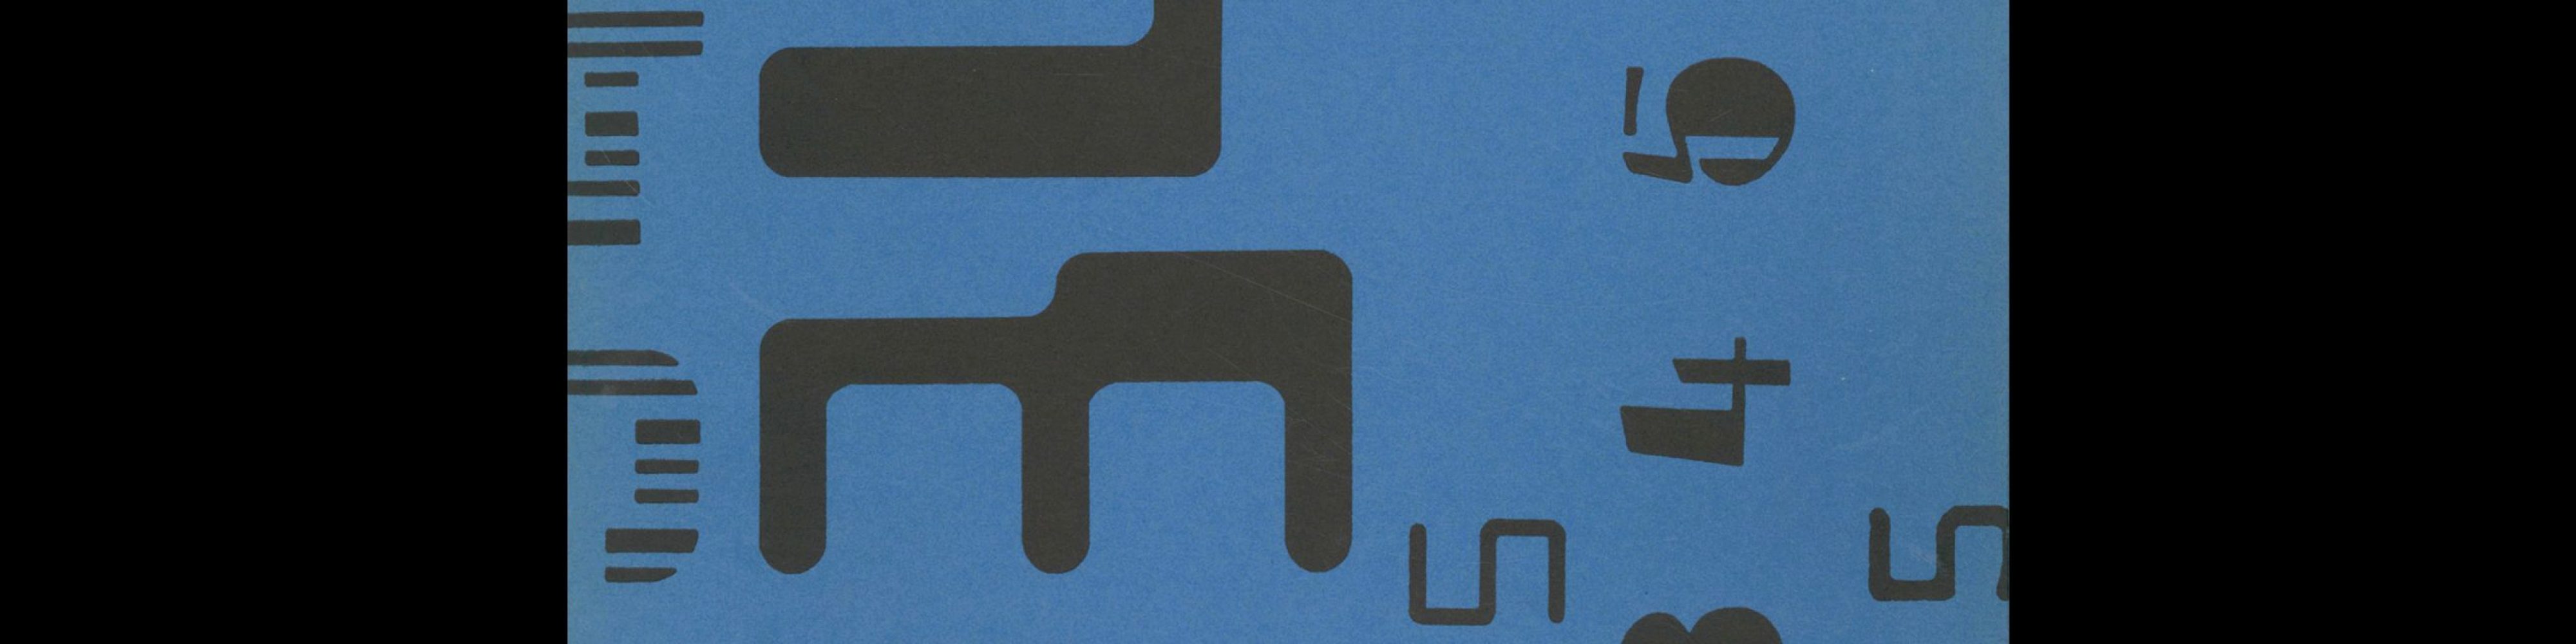 Typographica, New Series 5, 1962. Designed by Herbert Spencer